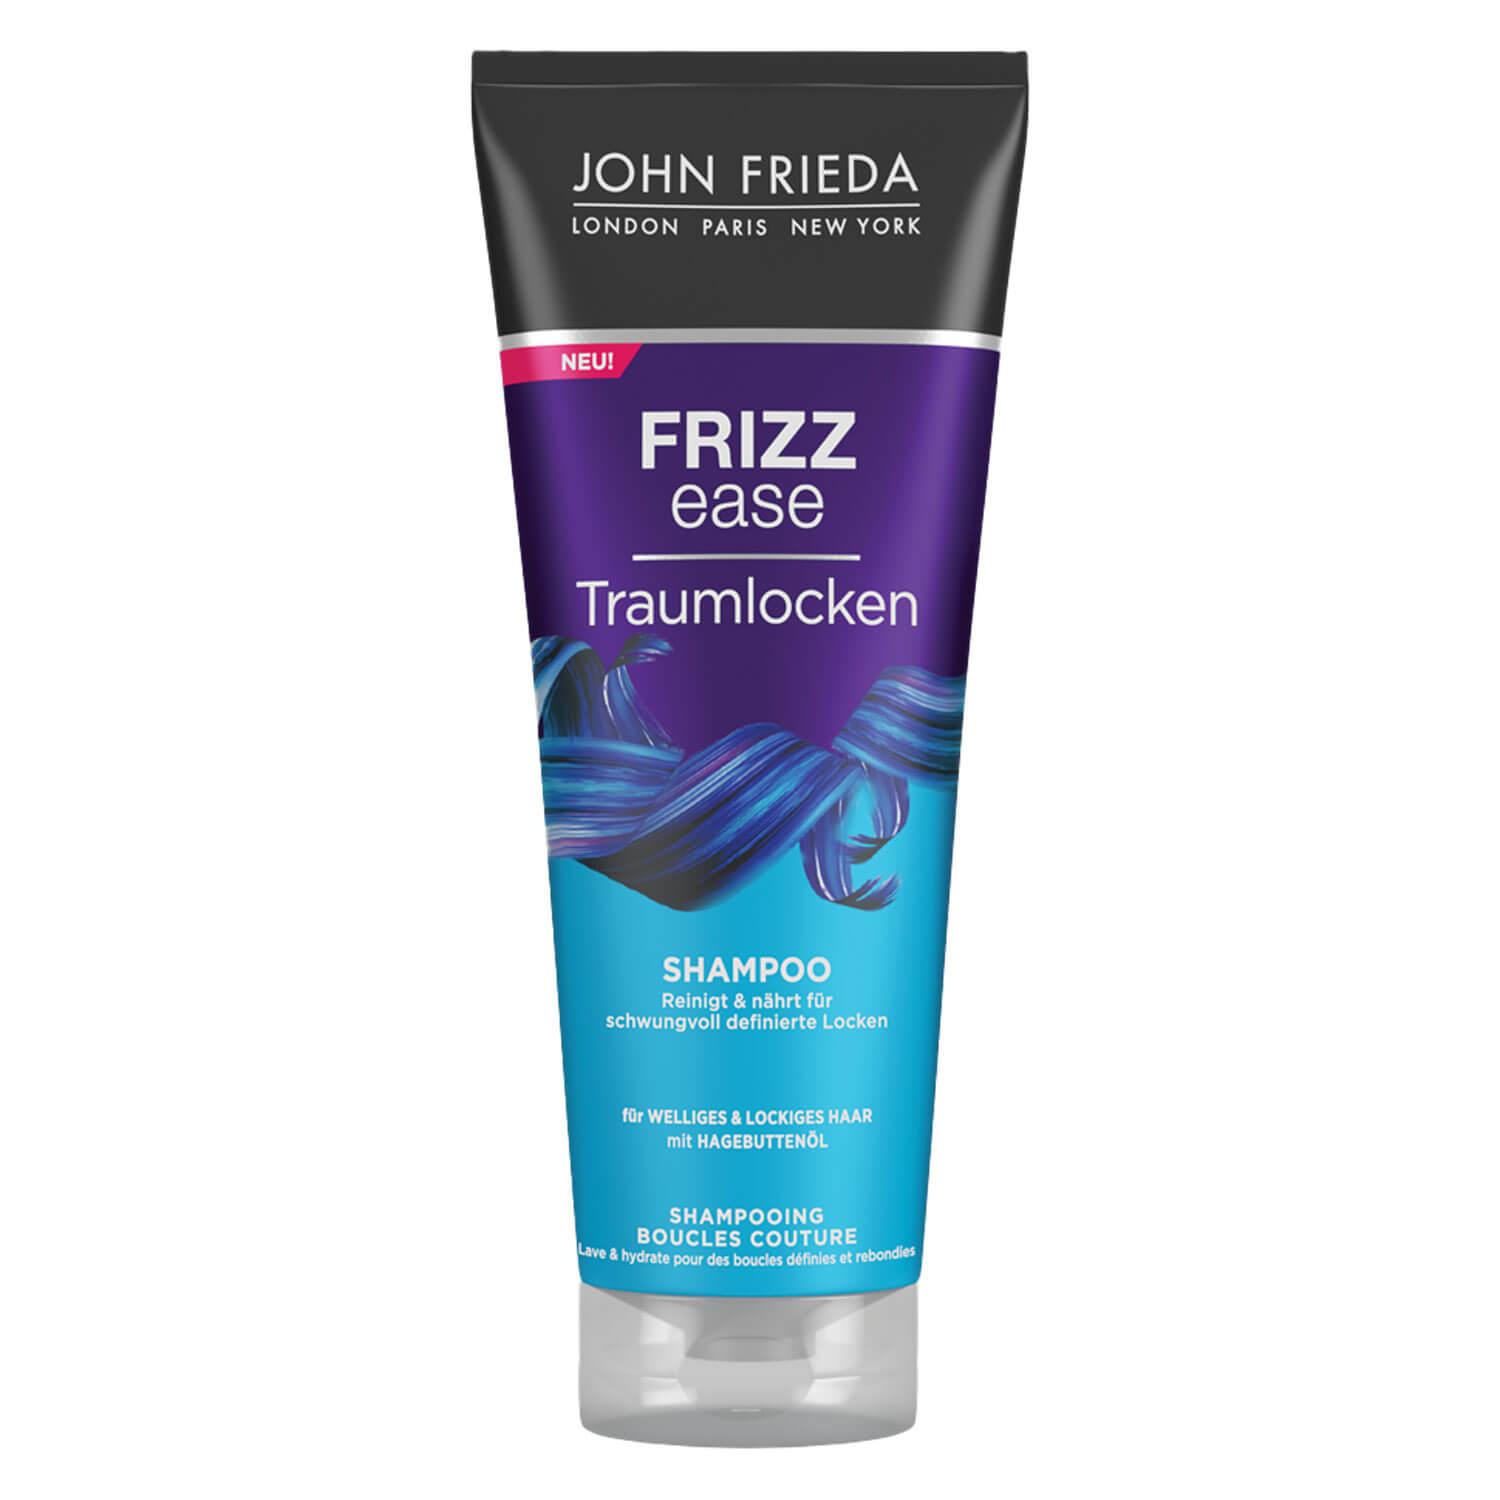 Frizz Ease - Traumlocken Shampoo